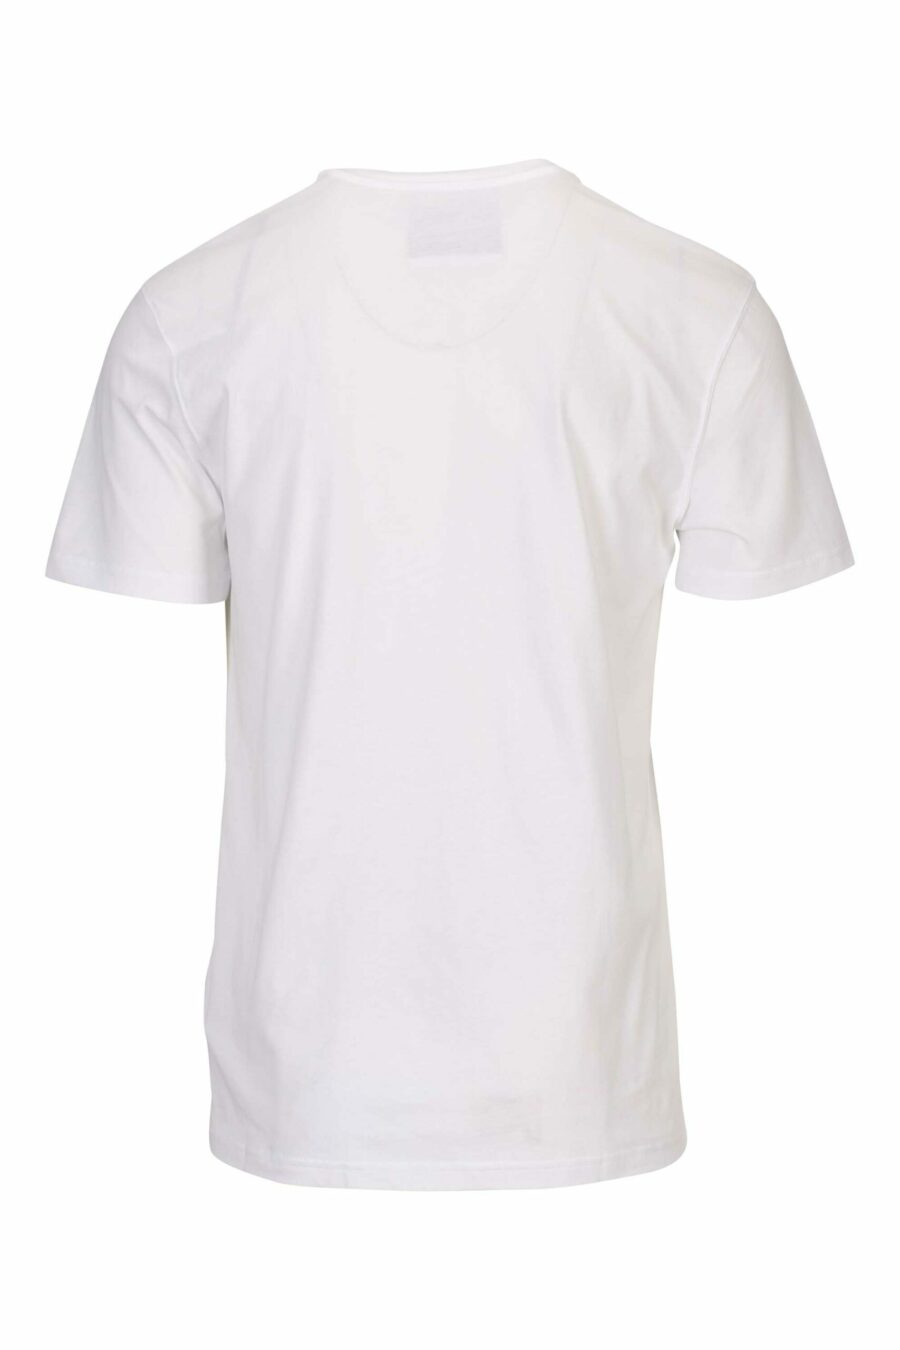 White T-shirt with black mini-logo label - 667113394664 1 scaled